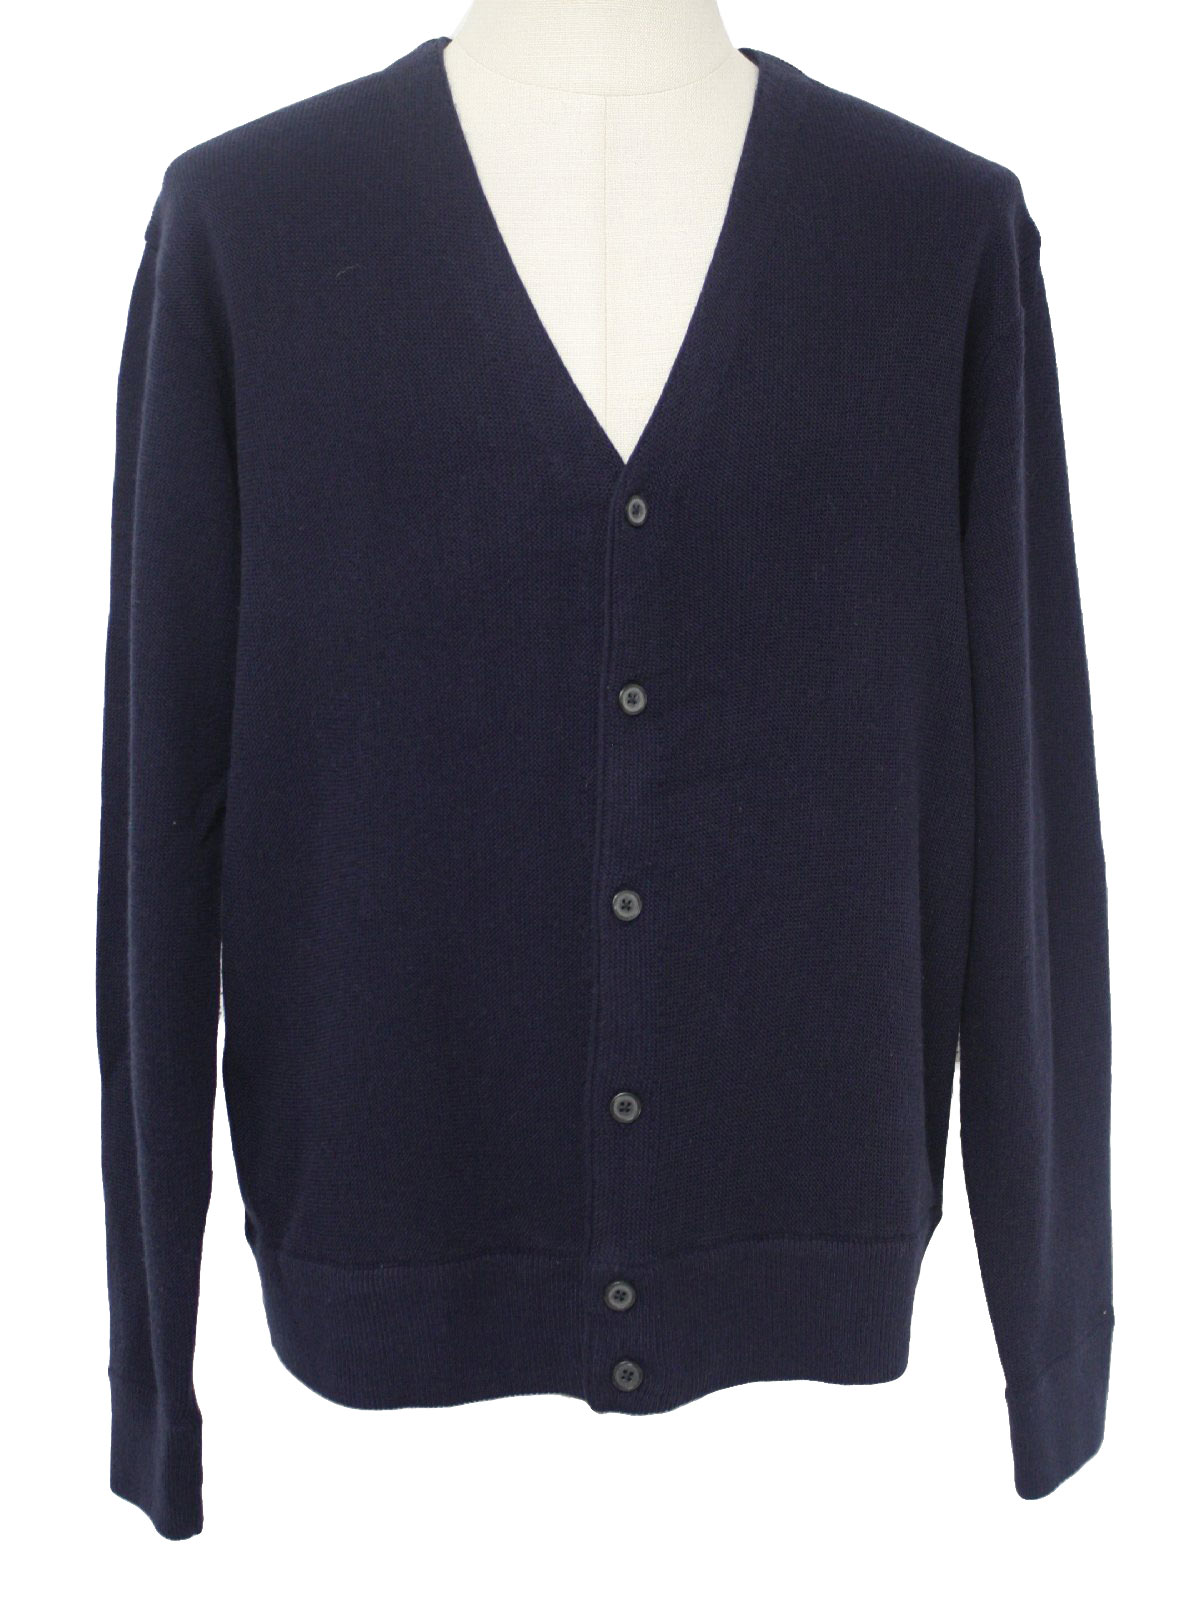 Vintage 80s Caridgan Sweater: 80s -no label- Mens dark navy blue ...